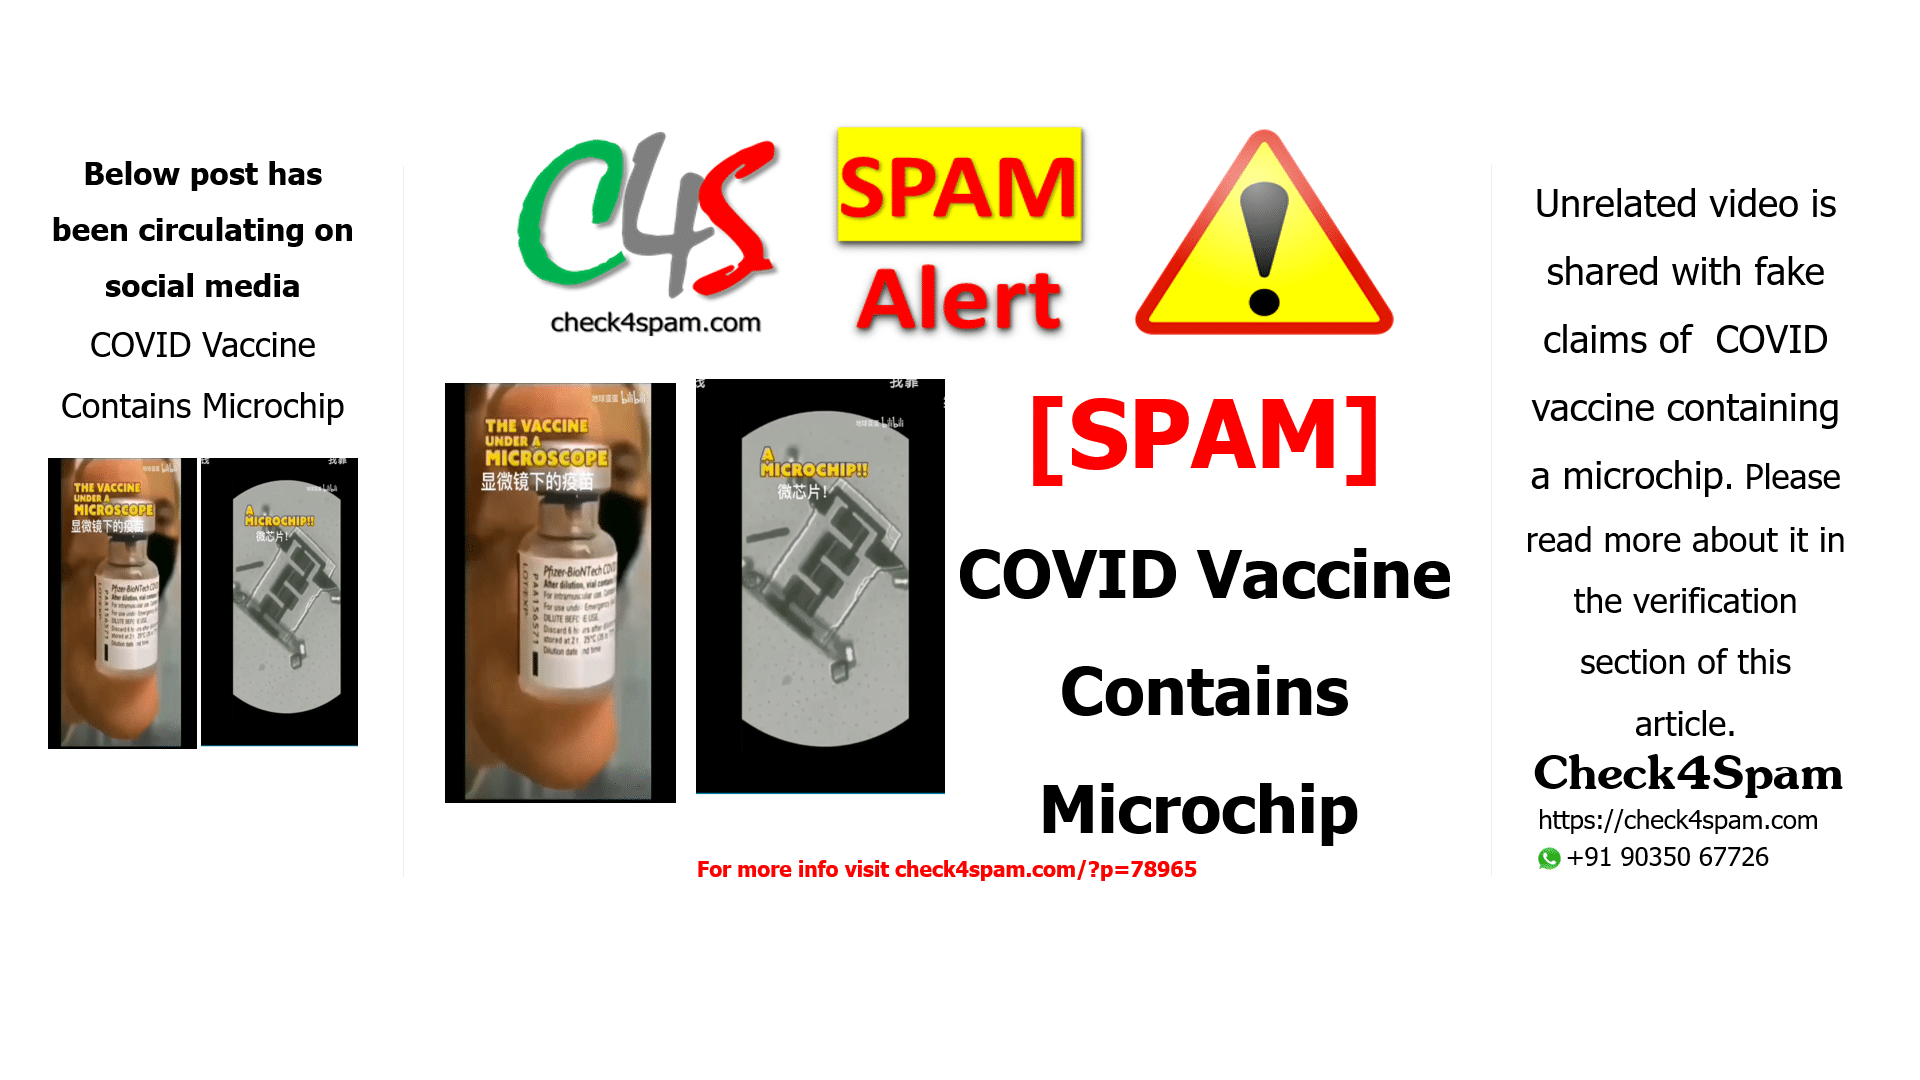 COVID Vaccine Contains Microchip